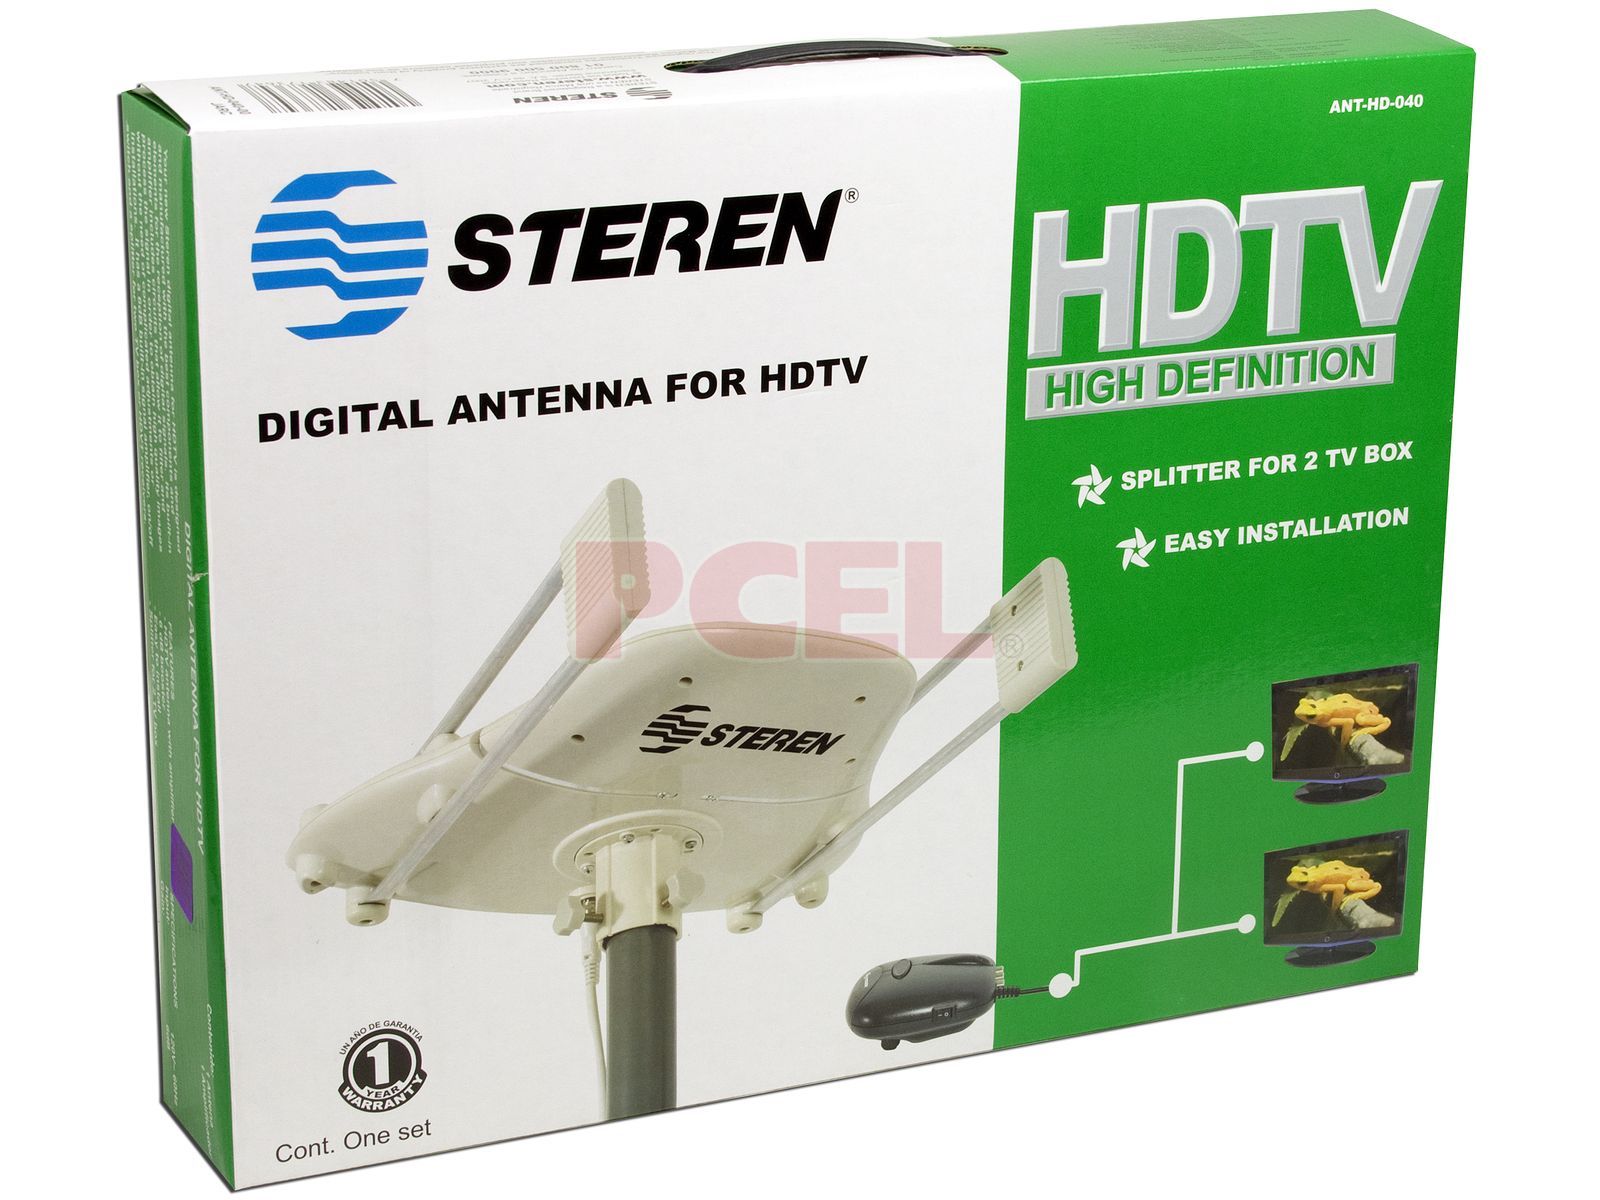 Antena aérea TDT HD Steren Xtreme de alta definición para DVB-T2 - Tecnopura